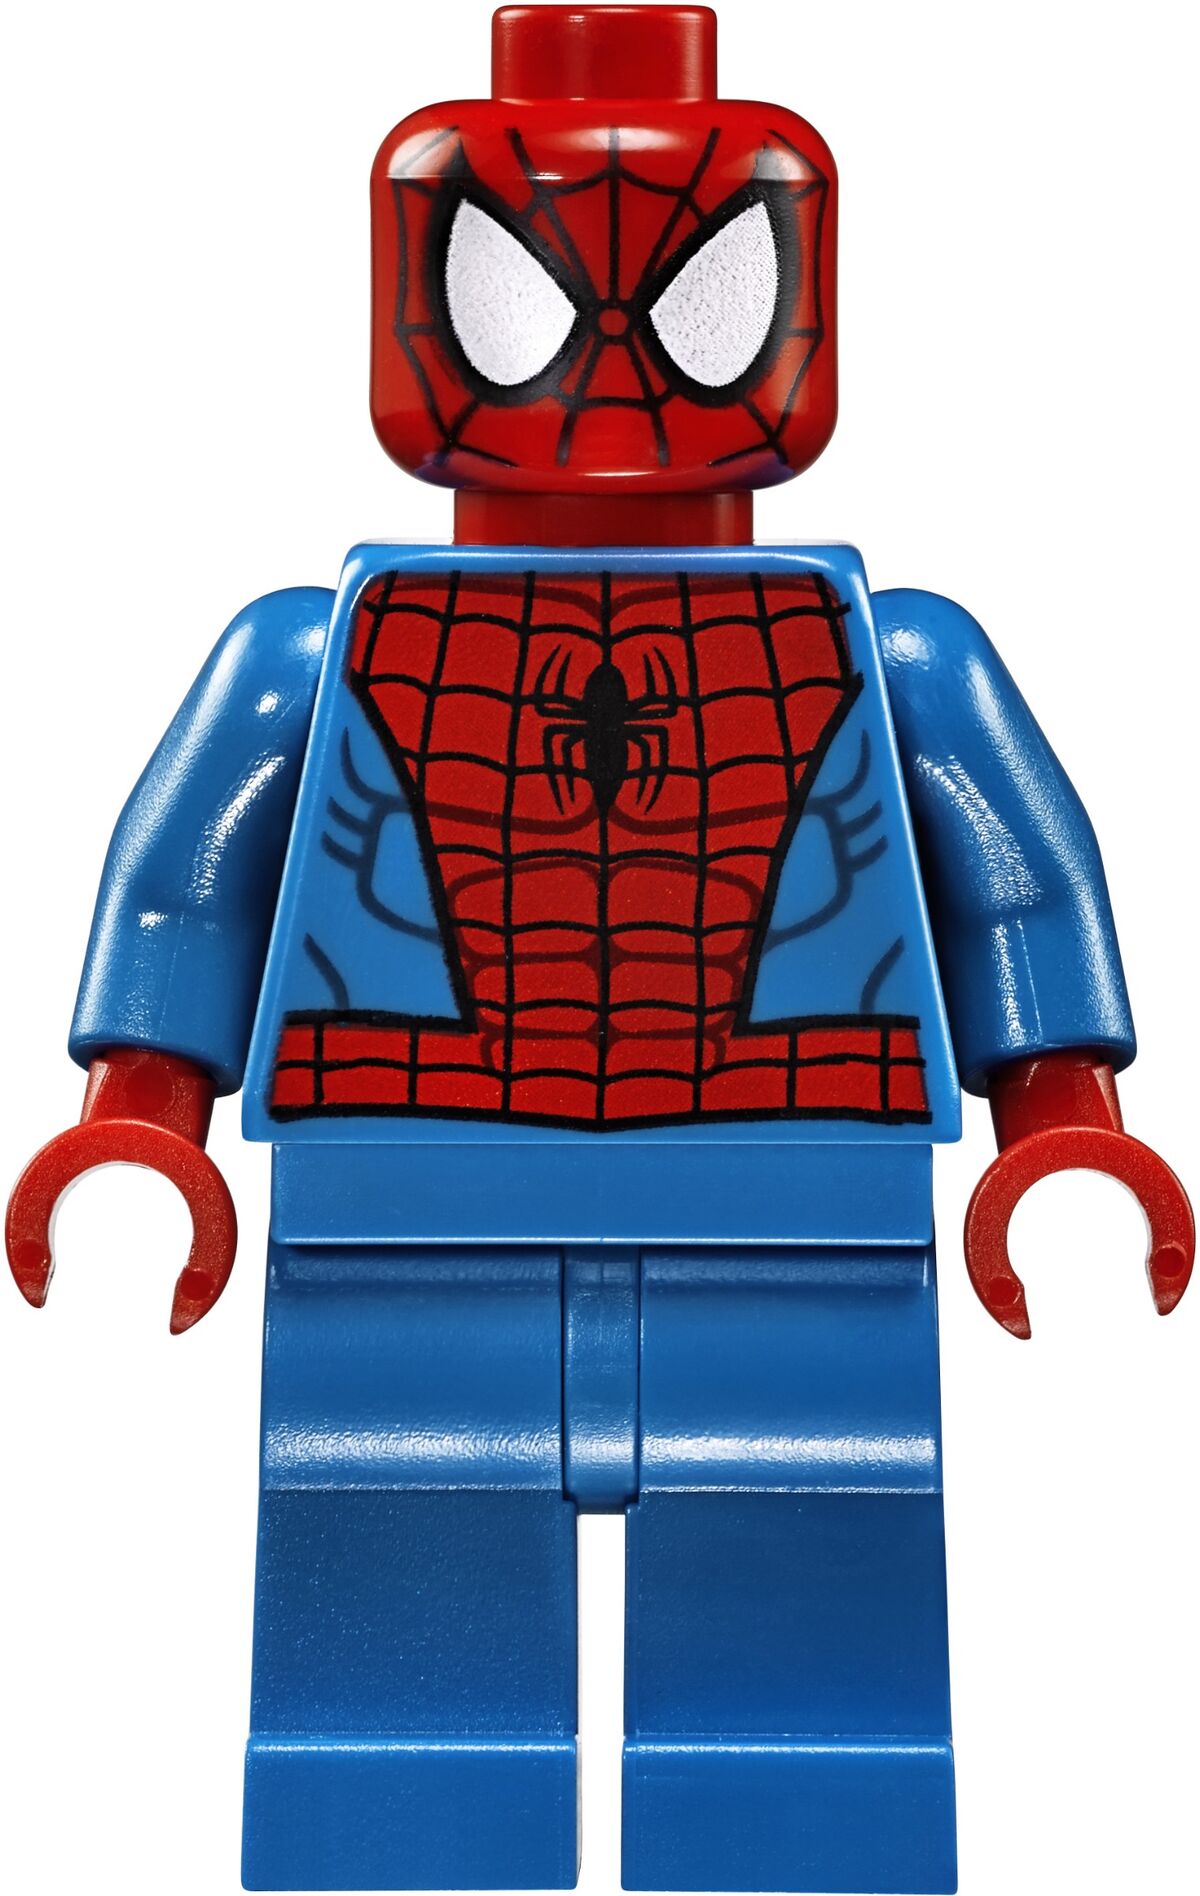 Spider-Man | Lego and DC Superheroes Wiki | Fandom